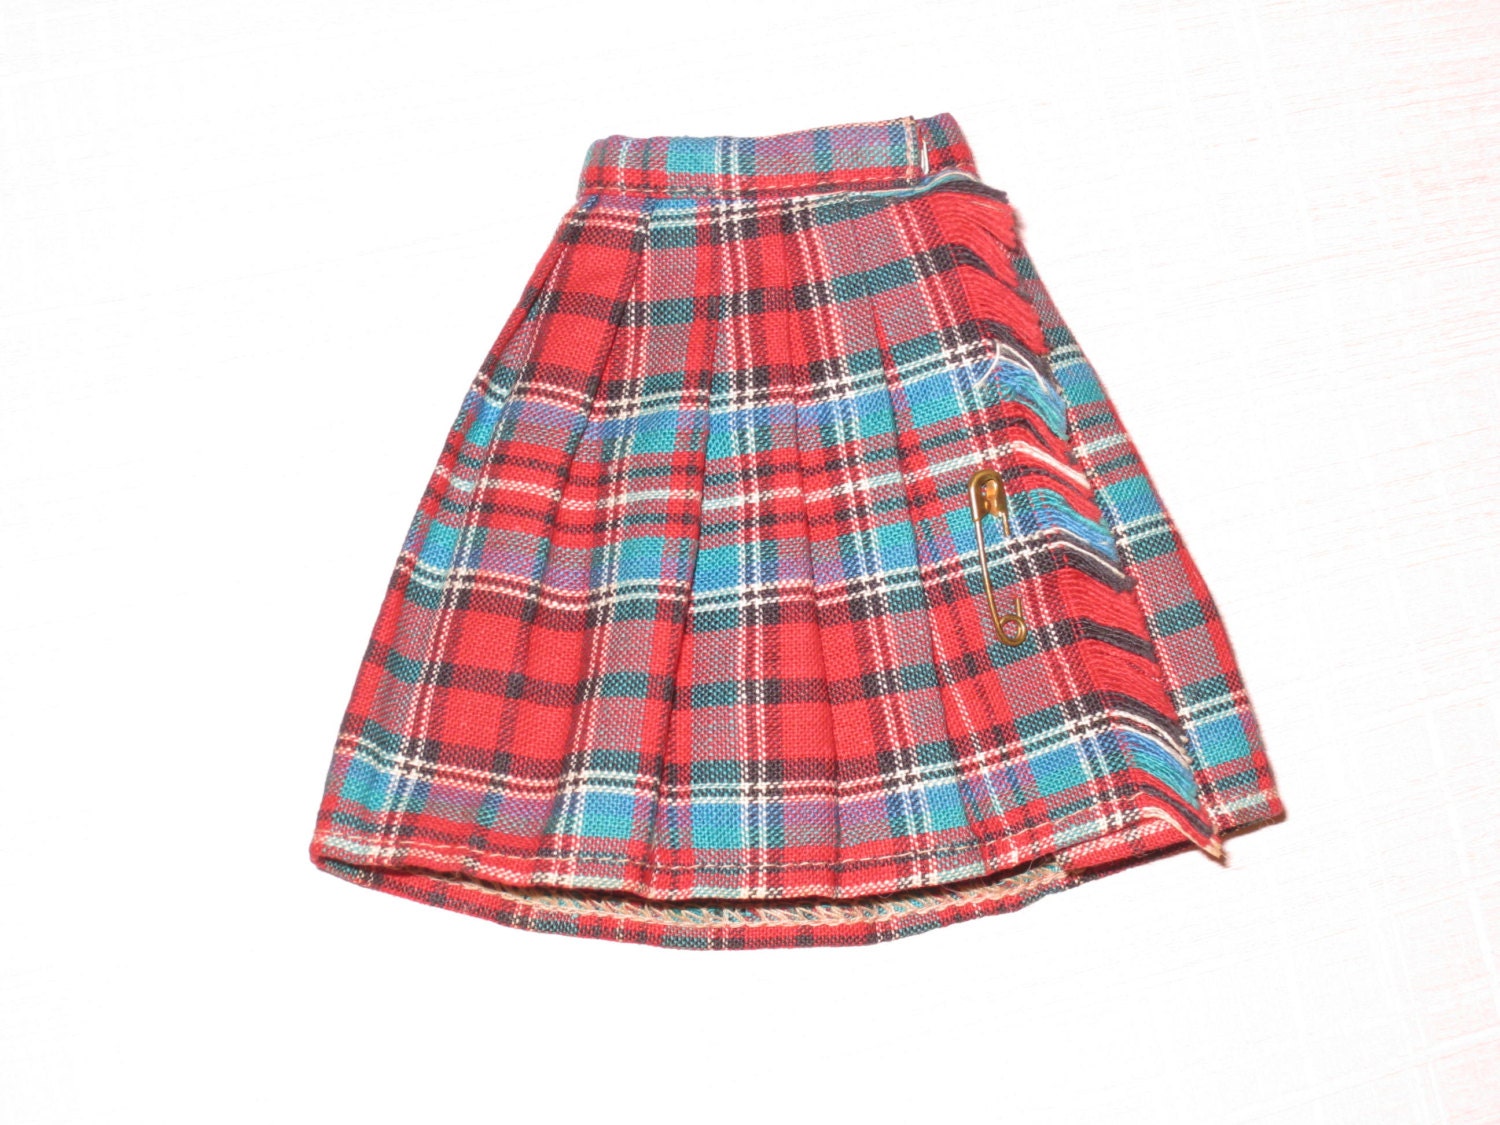 Vintage 1960s IDEAL Tammy Doll's Plaid Pleated Skirt 9221